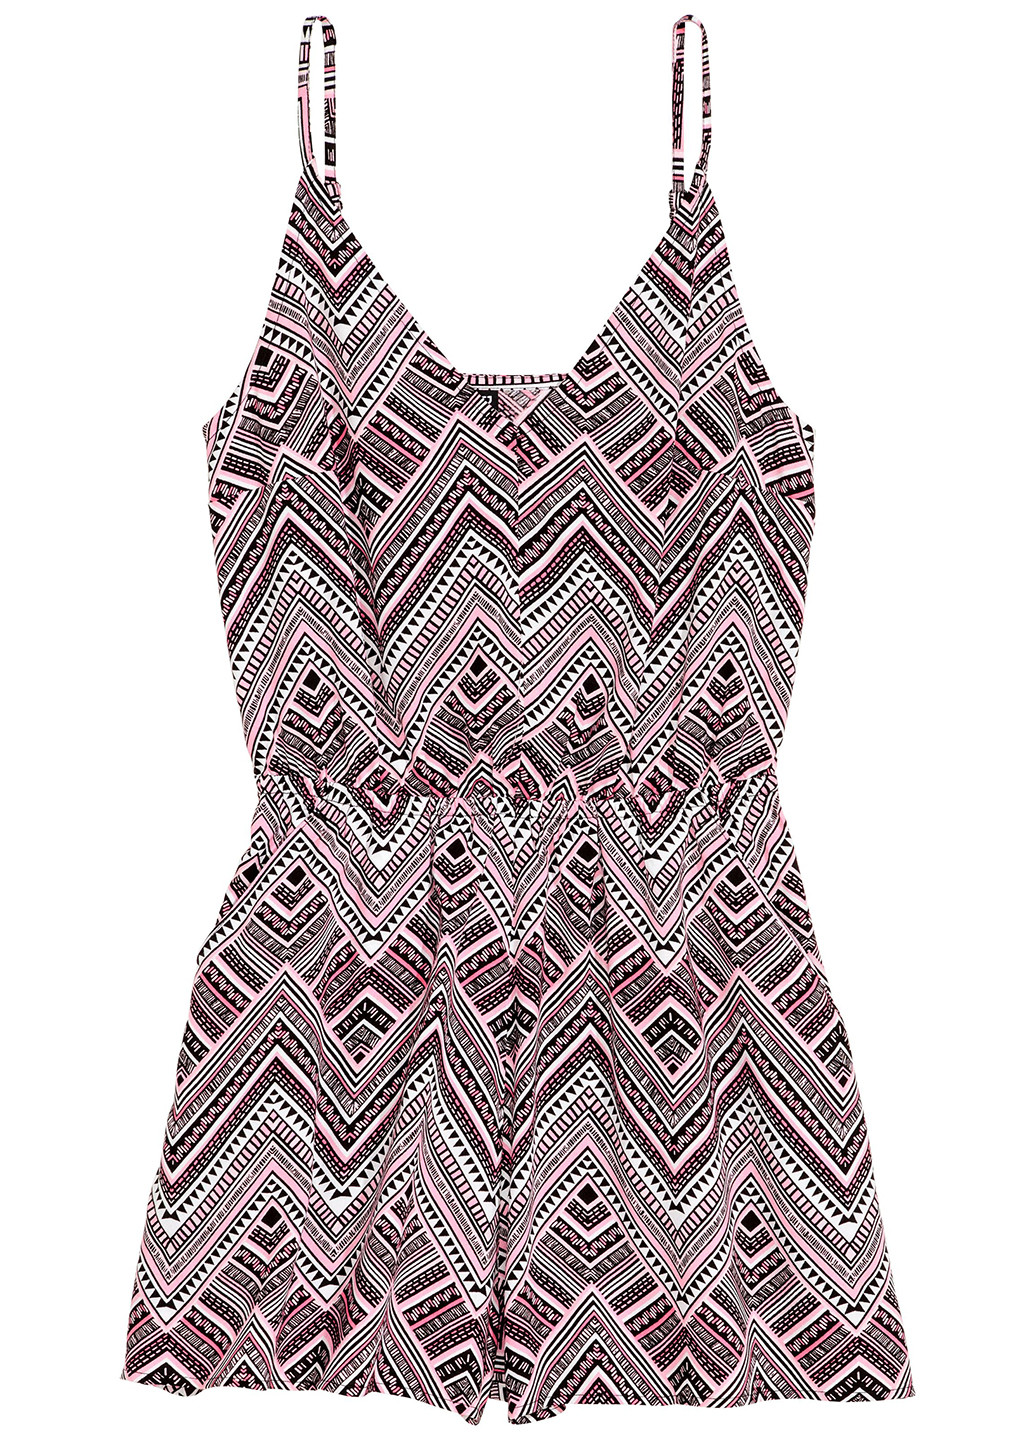 Комбинезон H&M комбинезон-шорты геометрический бордовый кэжуал вискоза